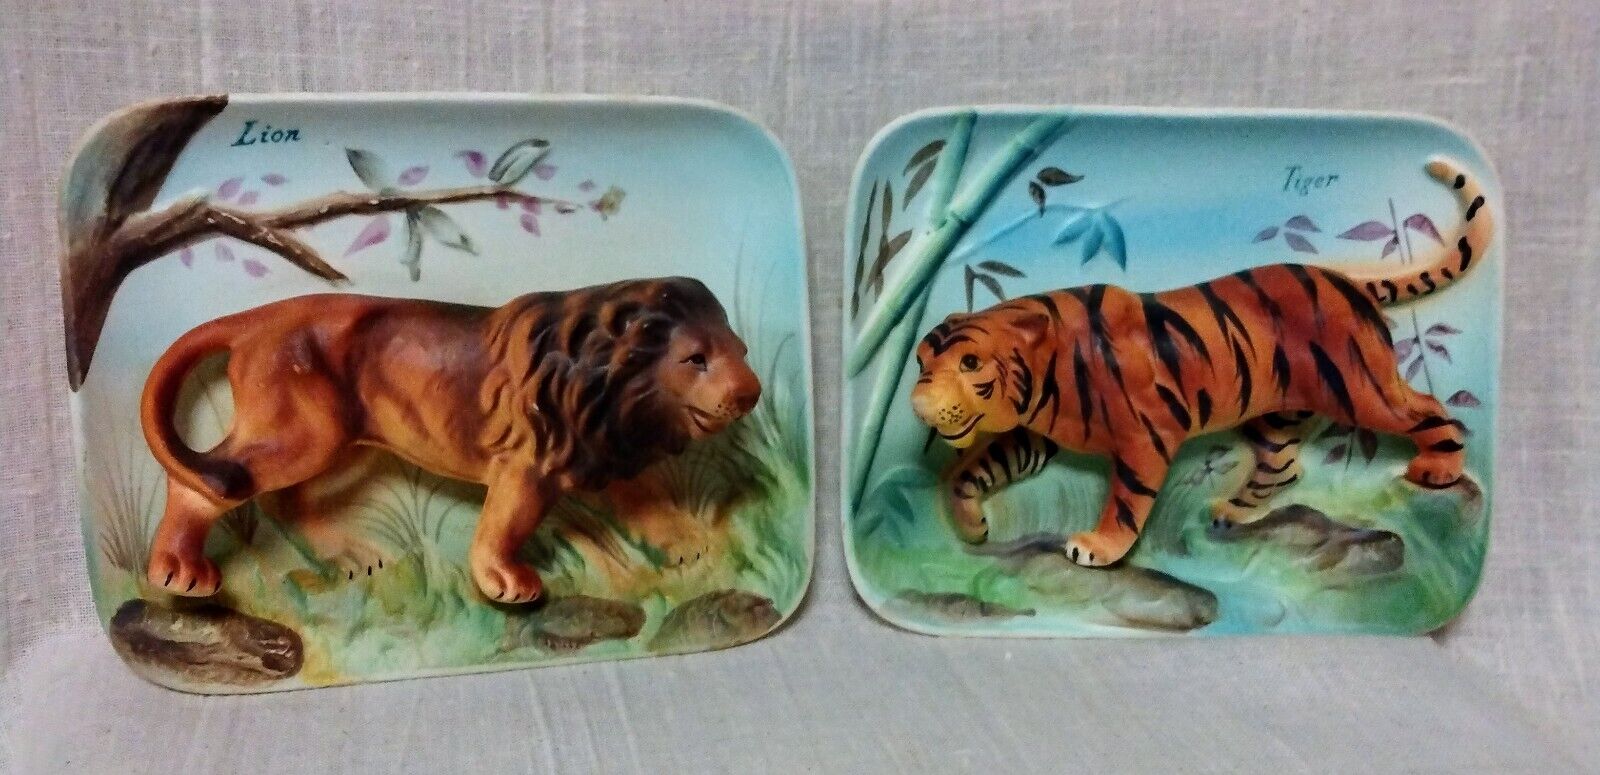 Vintage Bradley Exclusives Japan 3D Wall Plaque Decor Lion Tiger - Set of 2